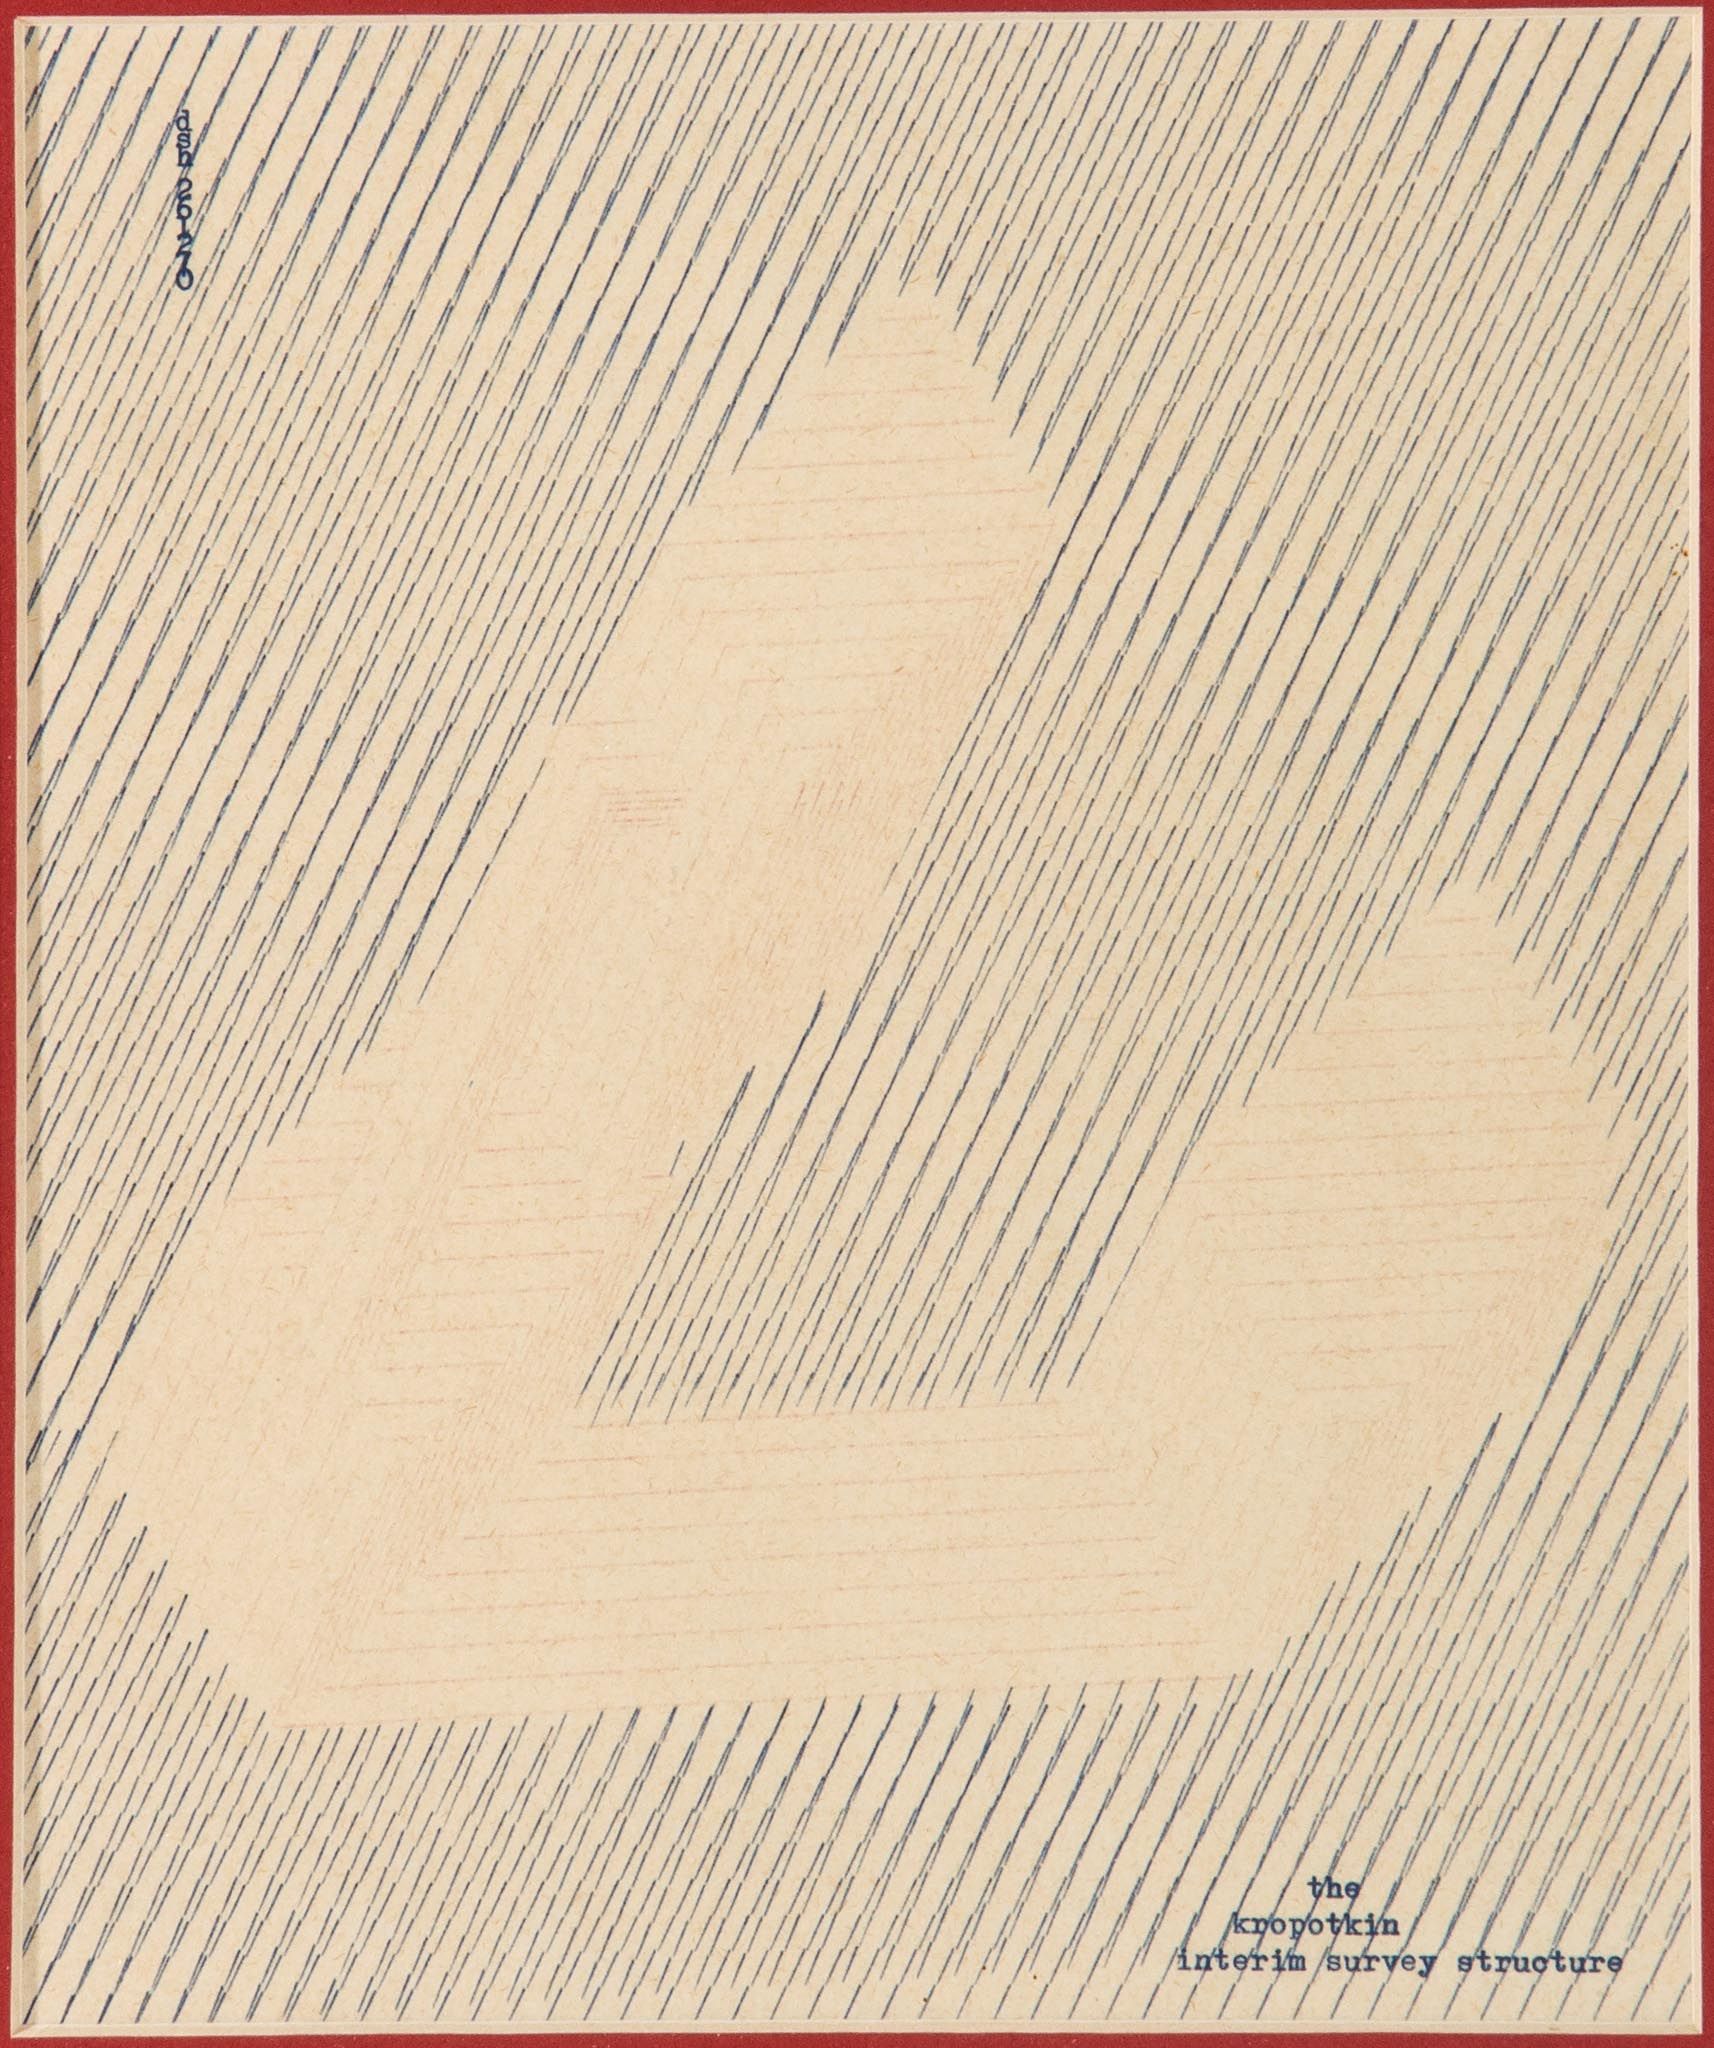 Dom Sylvester Houédard (1924-1992) - The Kropotkin Interim Survey Structure, 1970 biro on paper,